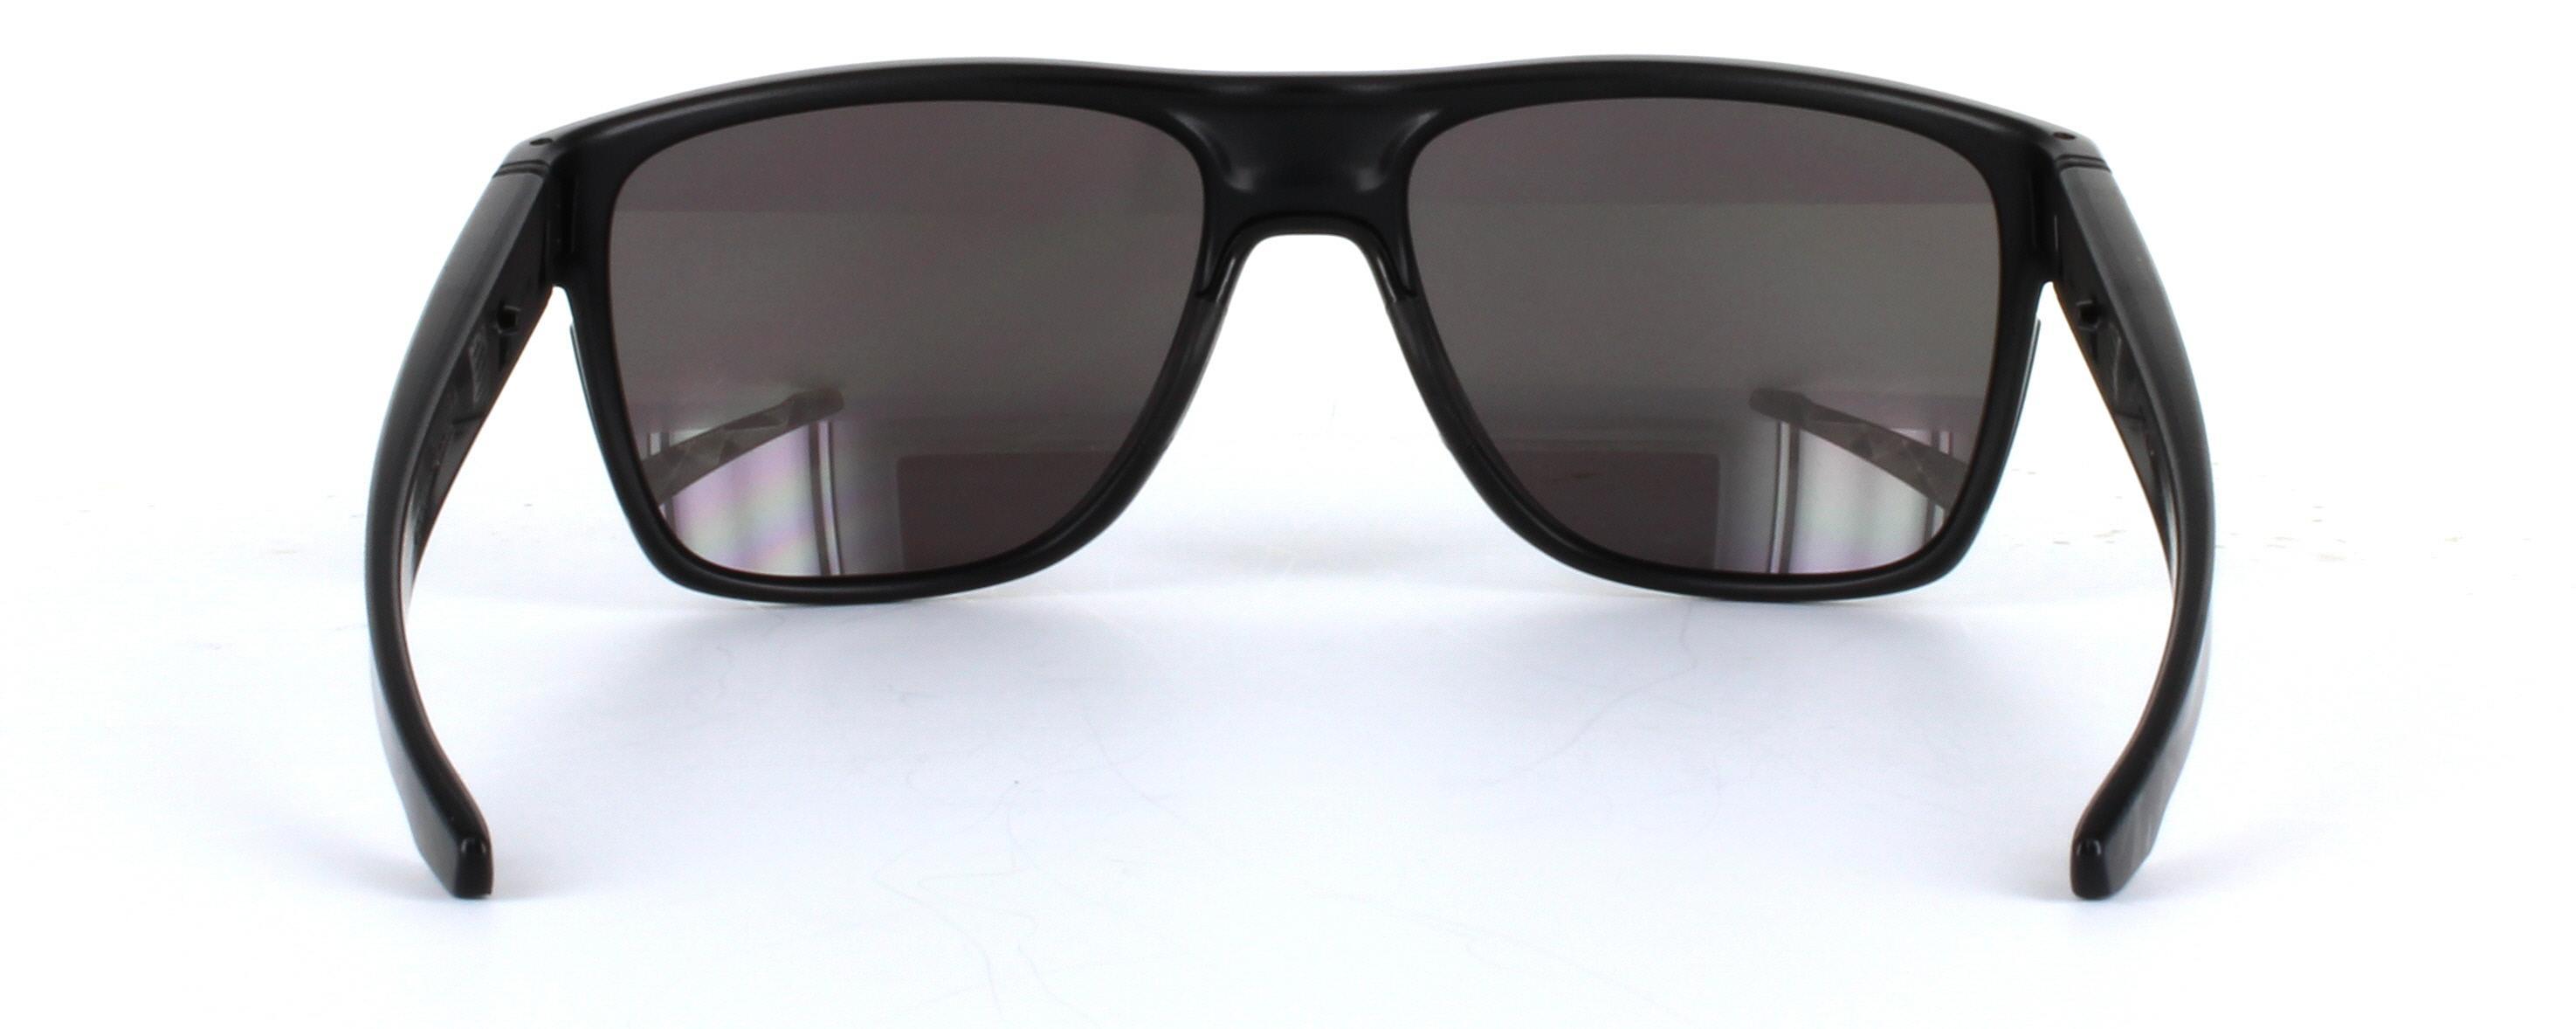 Oakley (O9360) Black Full Rim Plastic Sunglasses - Image View 3